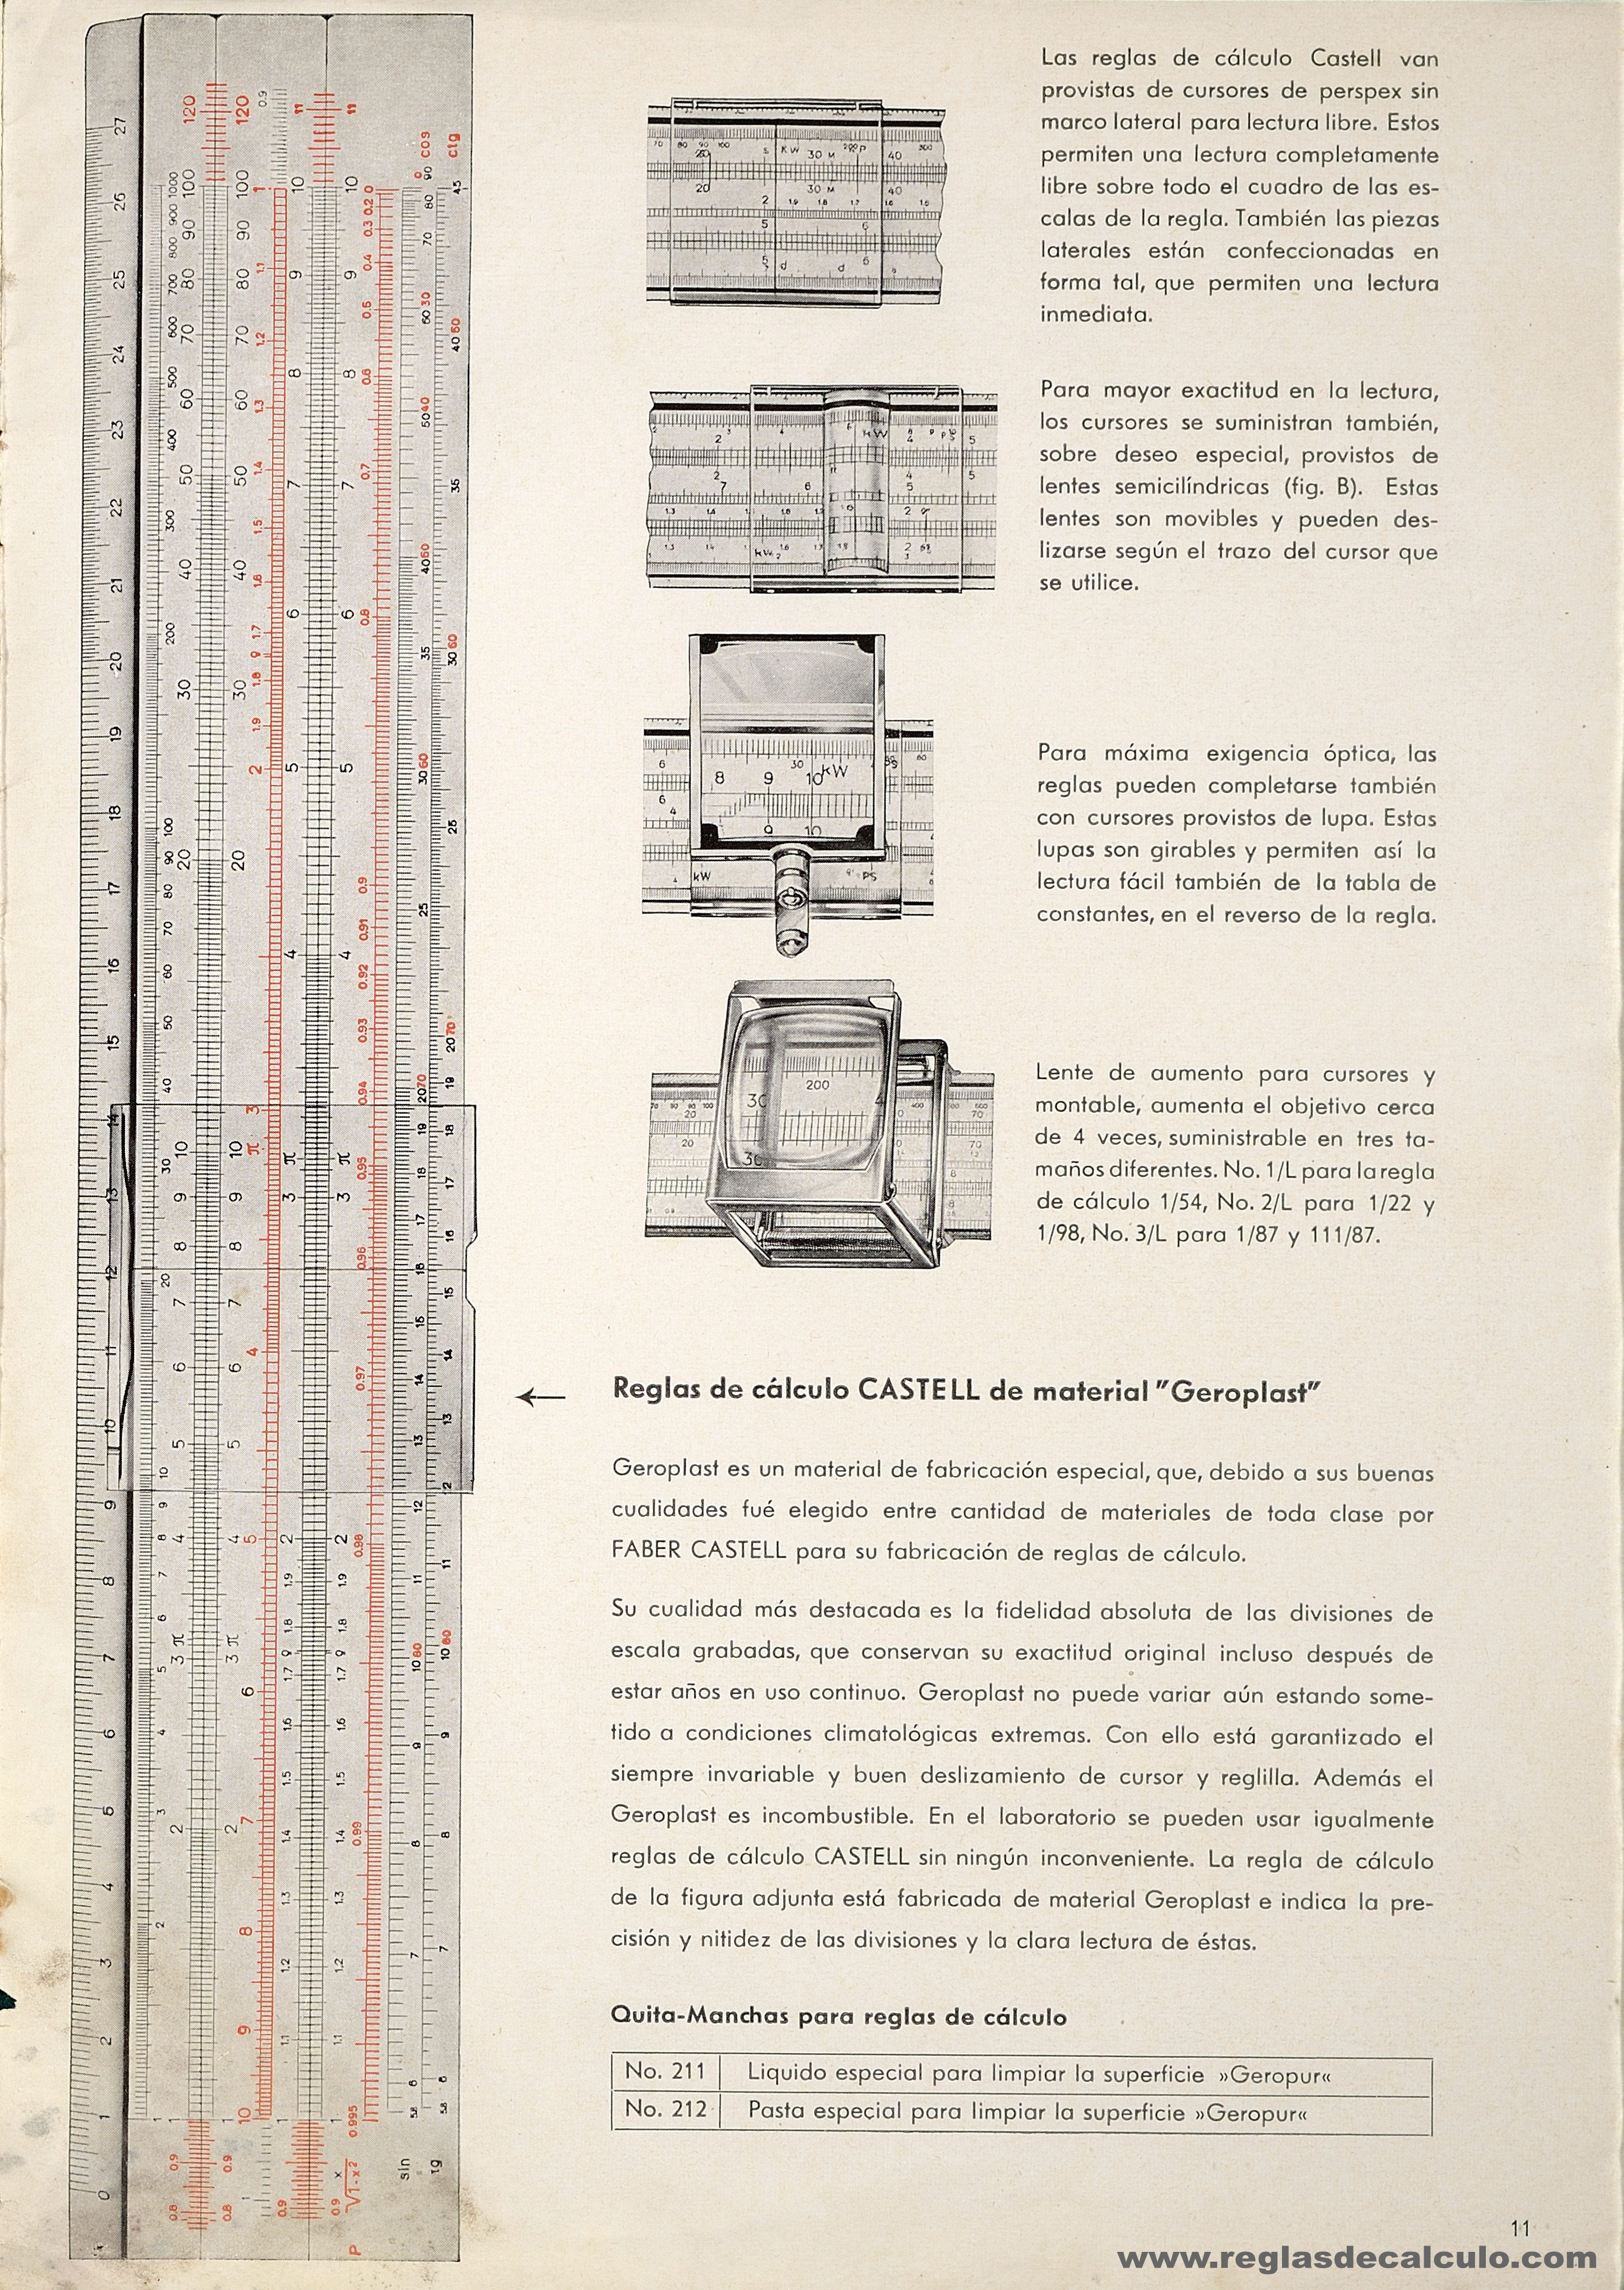 Catalogo Español 1955 Faber Castell Regla Calculo Slide rule